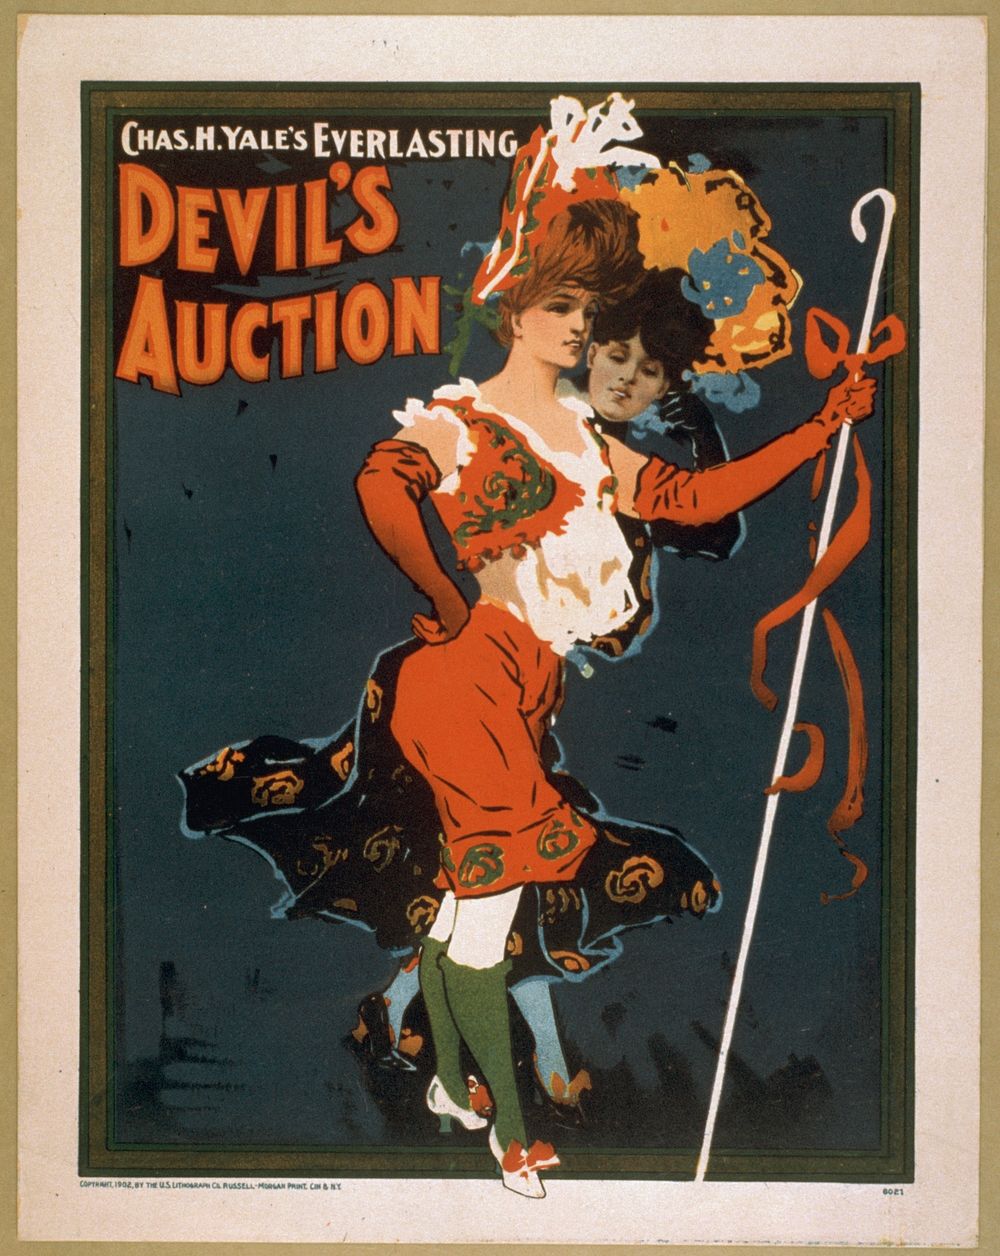 Chas. H. Yale's everlasting Devil's auction